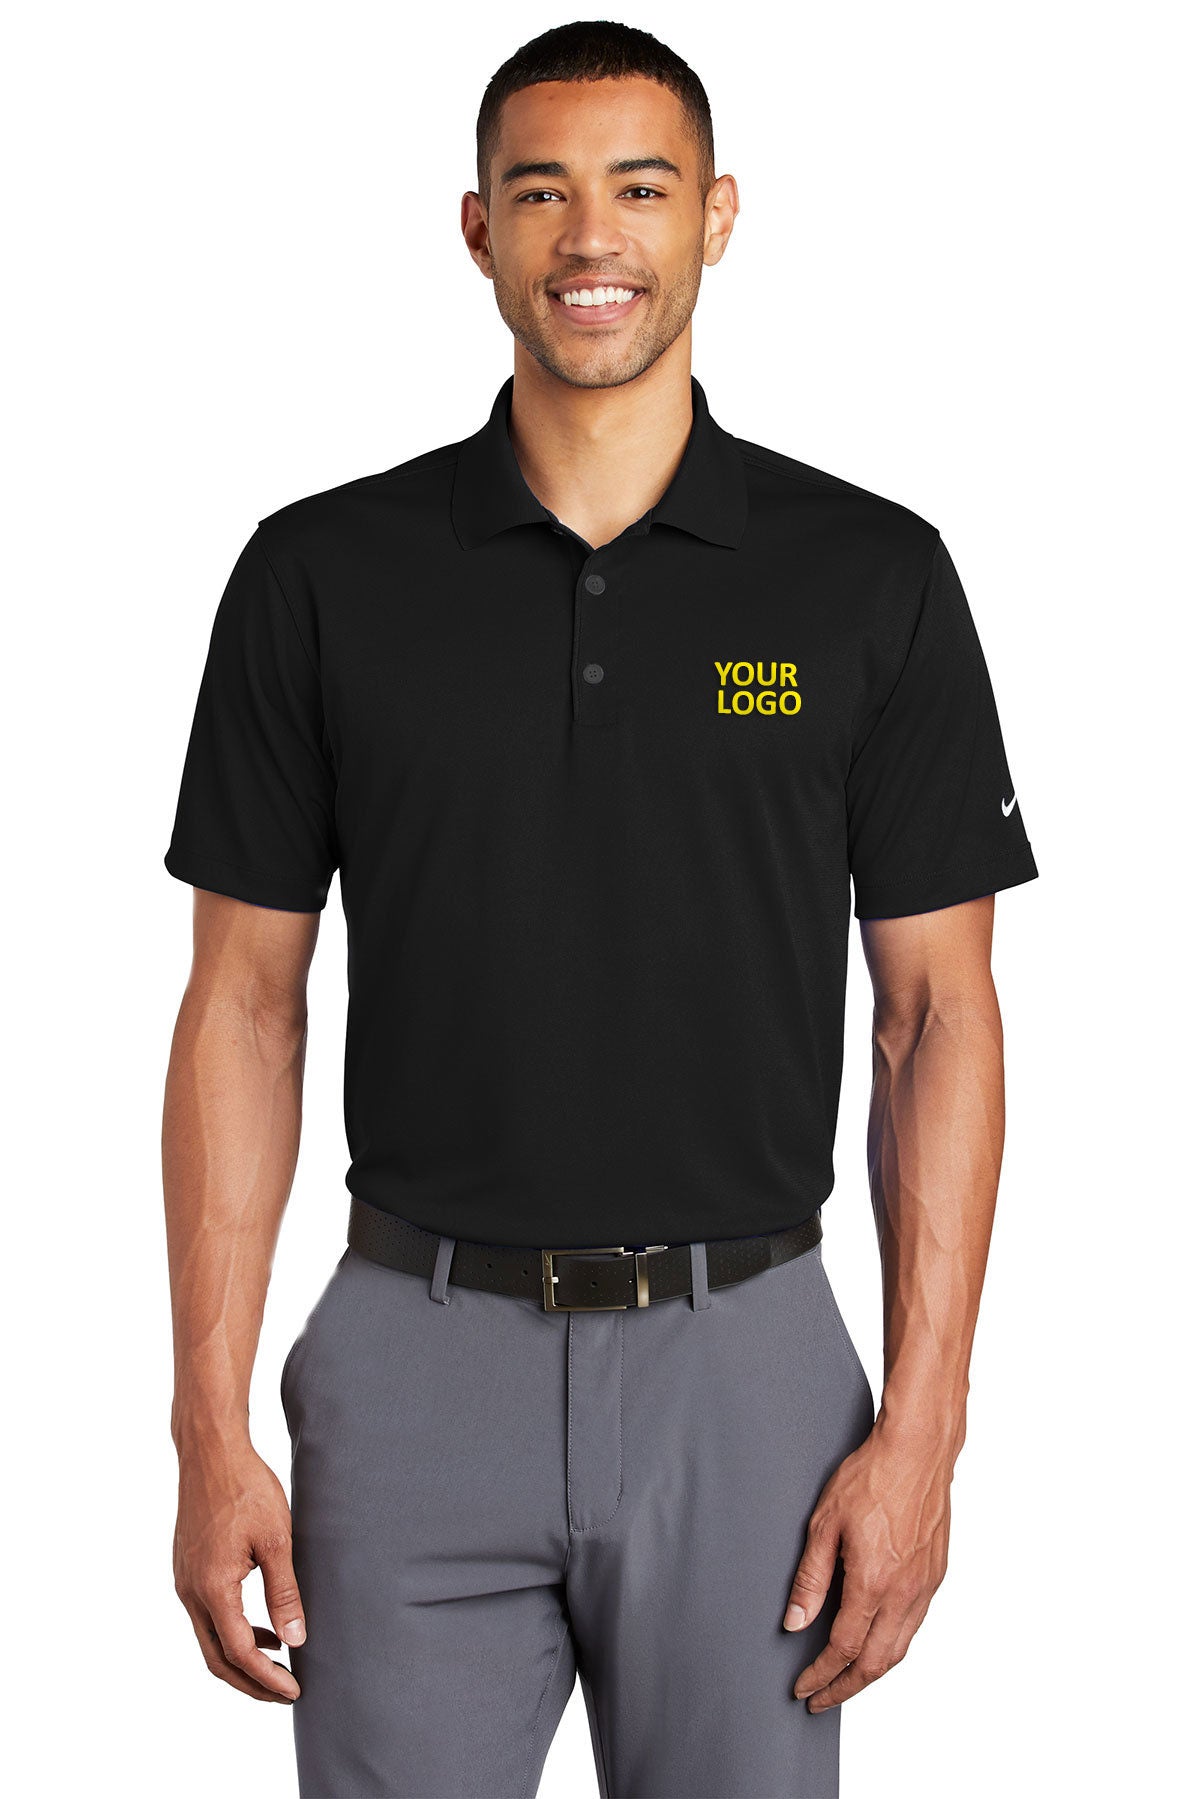 nike black 203690 work polo shirts with logo